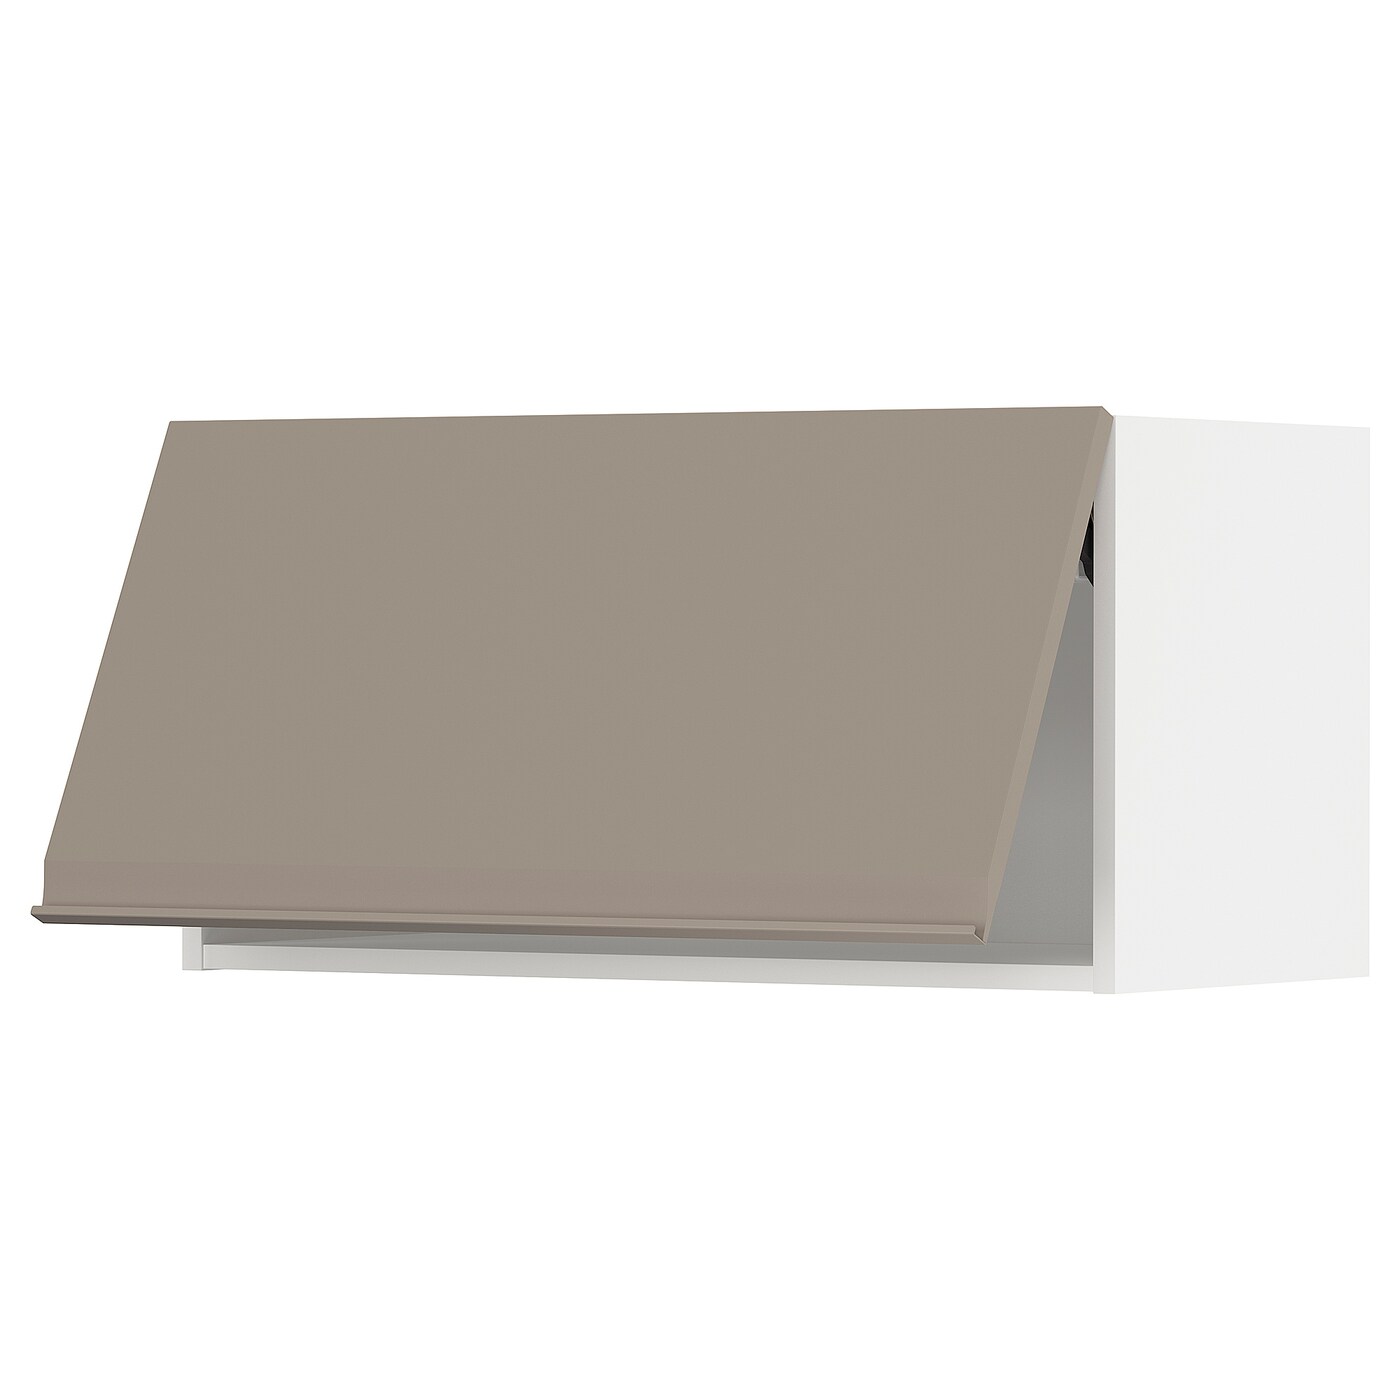 Навесной шкаф - METOD IKEA/ МЕТОД ИКЕА, 40х80 см, белый/светло-коричневый